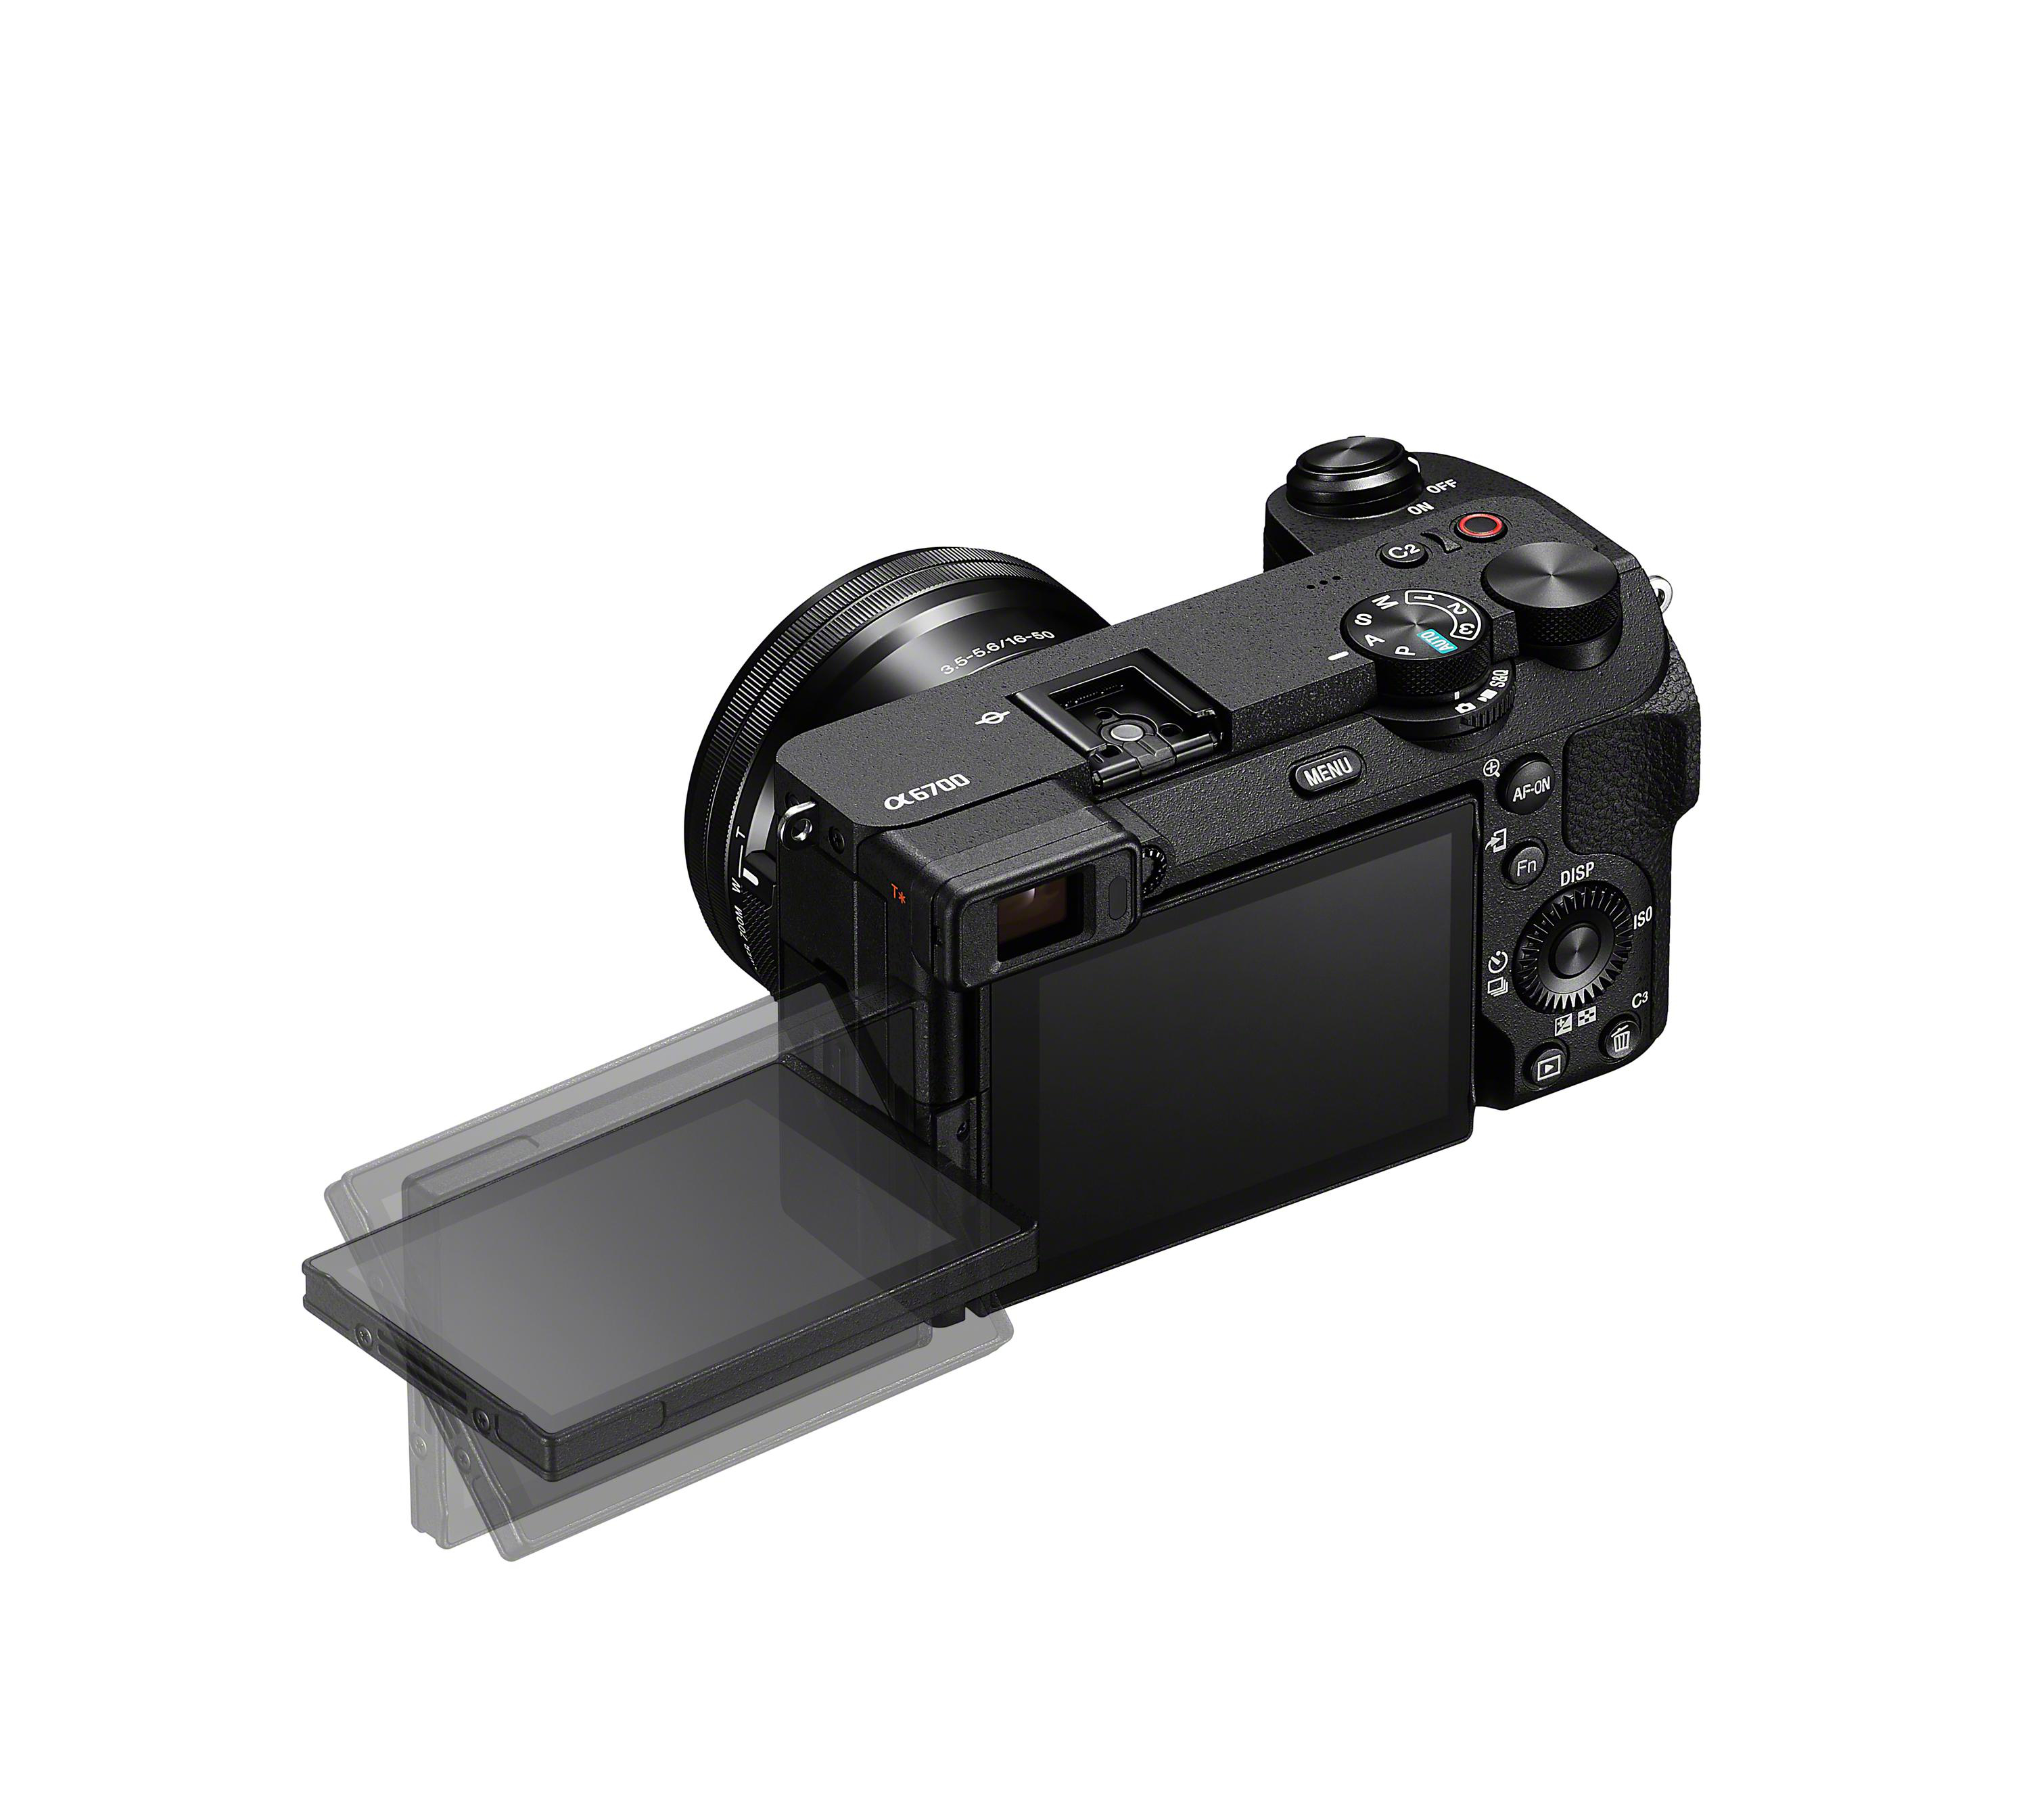 SONY mit 16-50 Objektiv 7,5 Kit Systemkamera Alpha 6700 mm, WLAN cm Touchscreen, Display